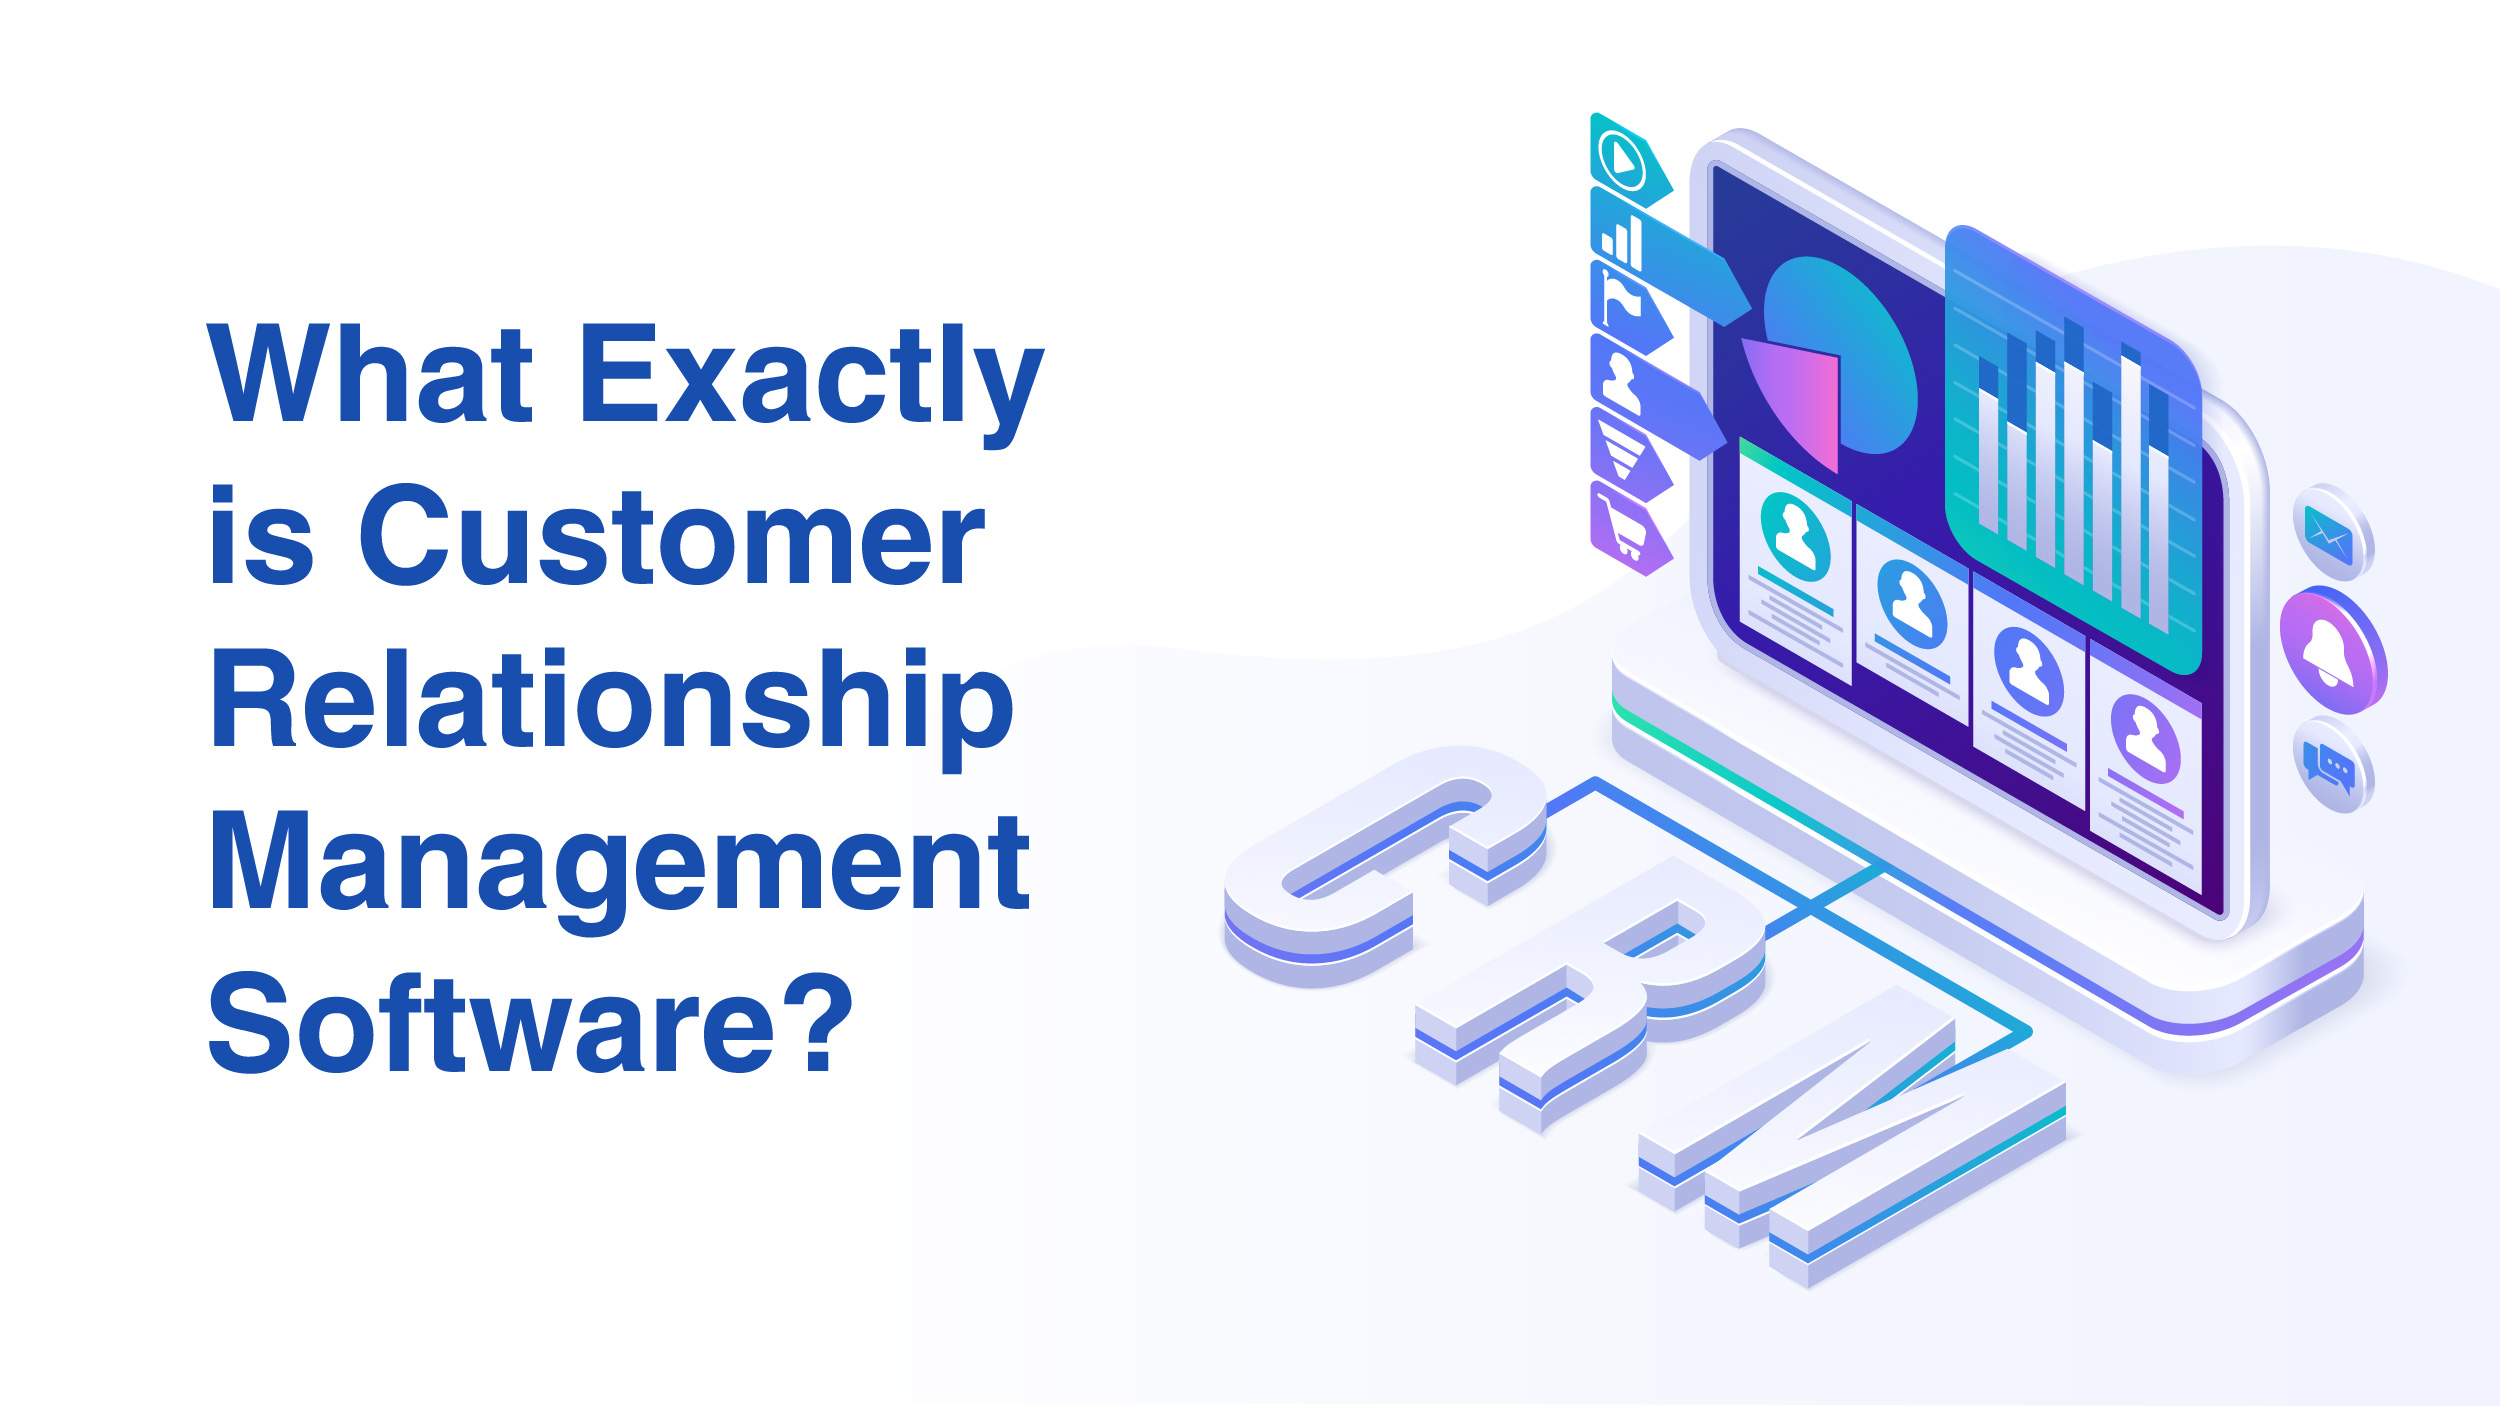 Customer Relationship Management software